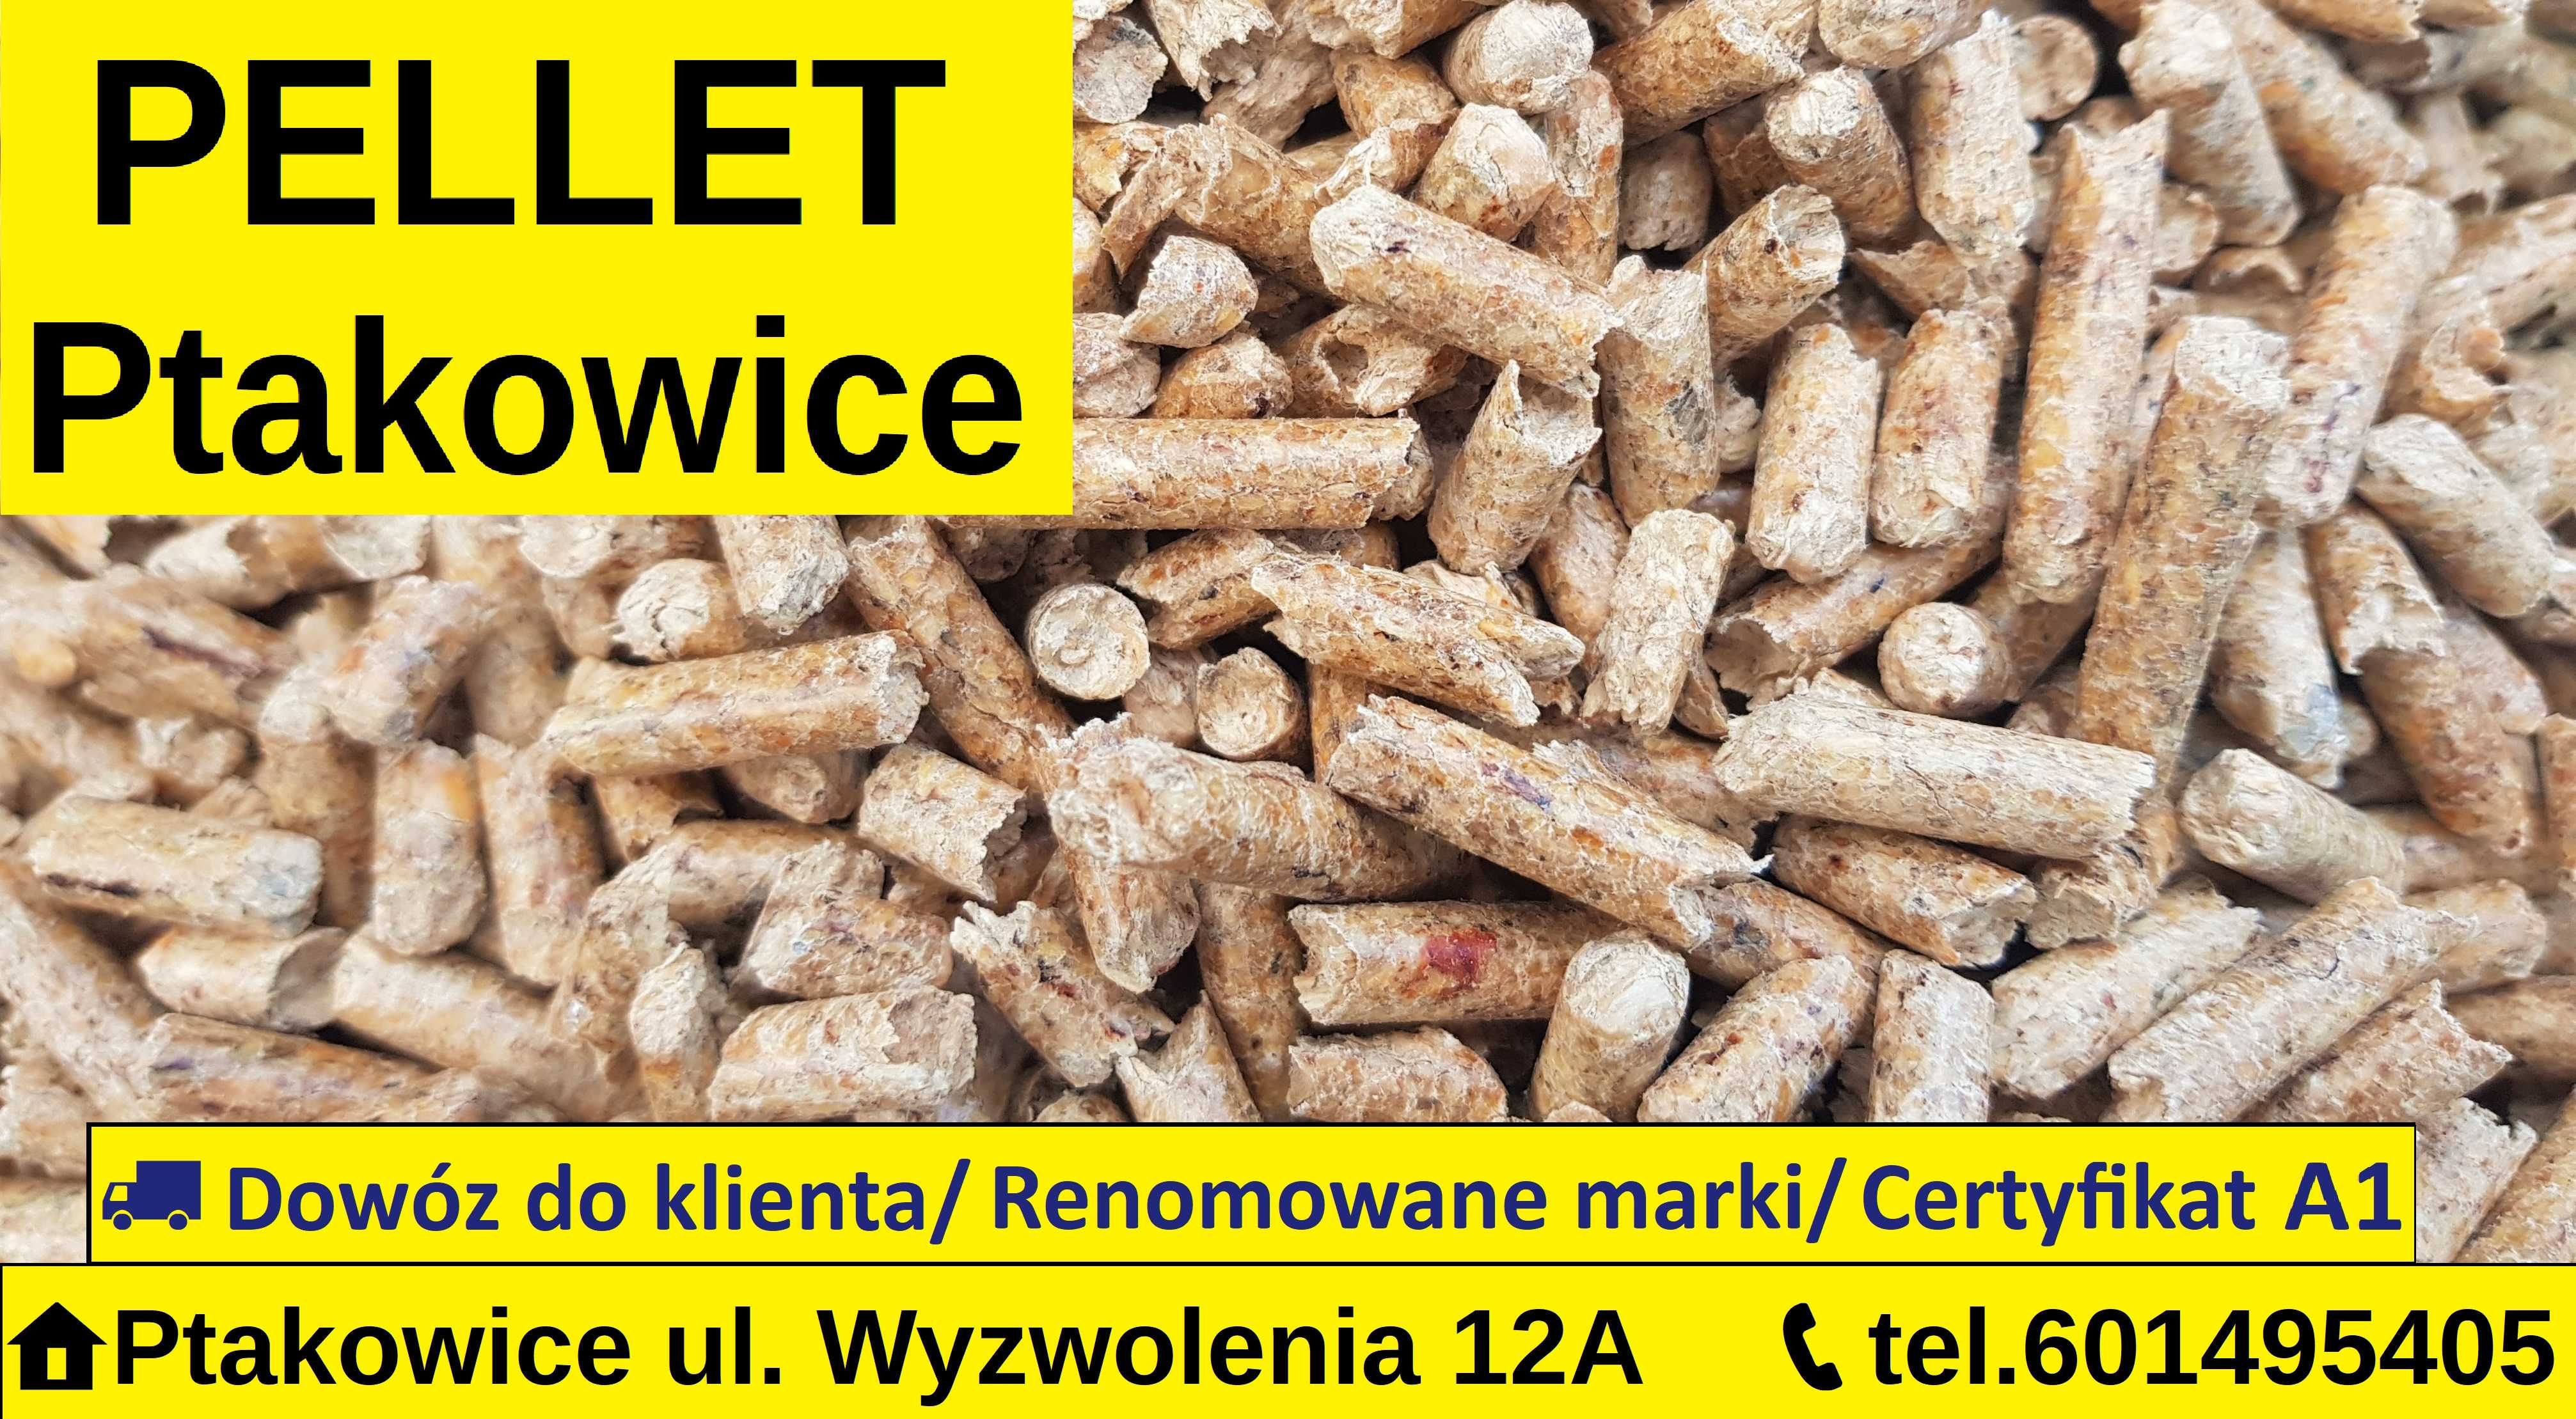 Pellet Result A1 dowóz Śląsk Olczyk PelletON certyfikat brutto